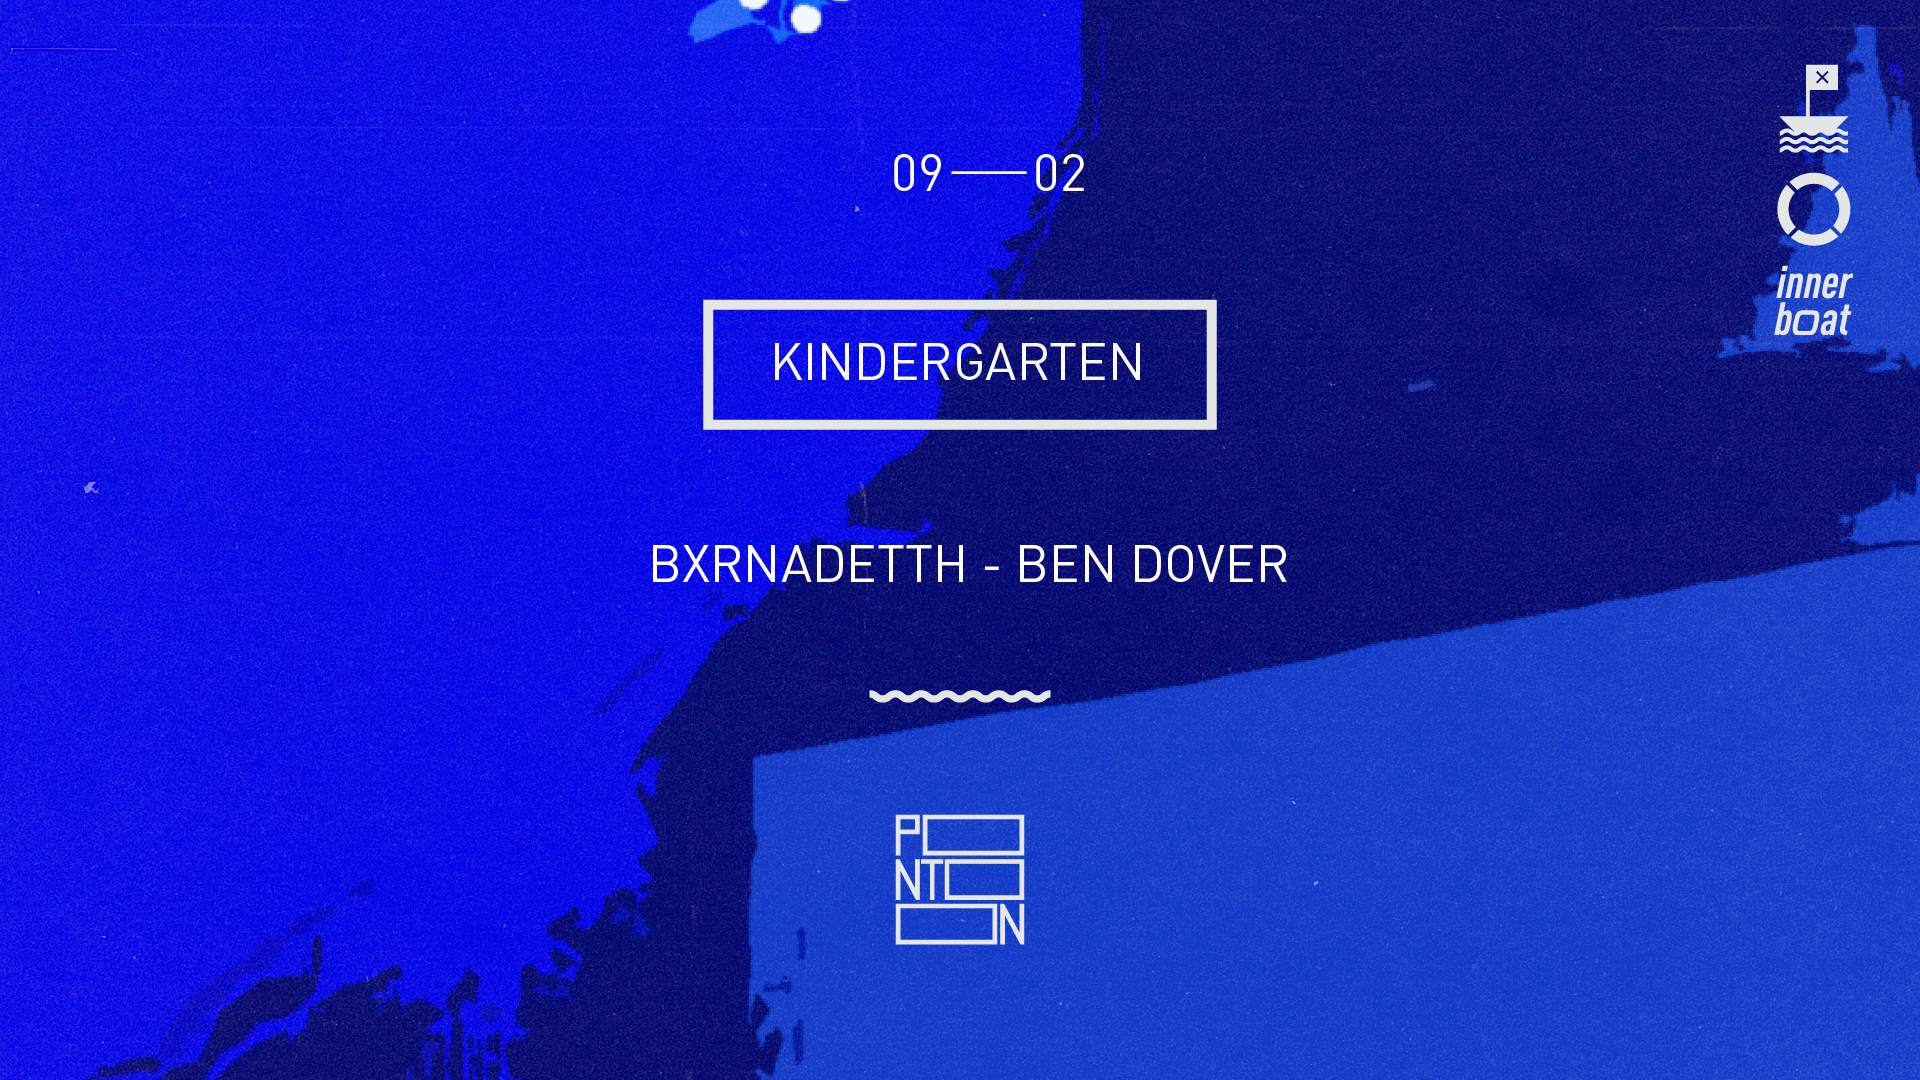 KINDERGARTEN ~ Pontoon Innerboat: Bxrnadetth, Ben Dover at Pontoon